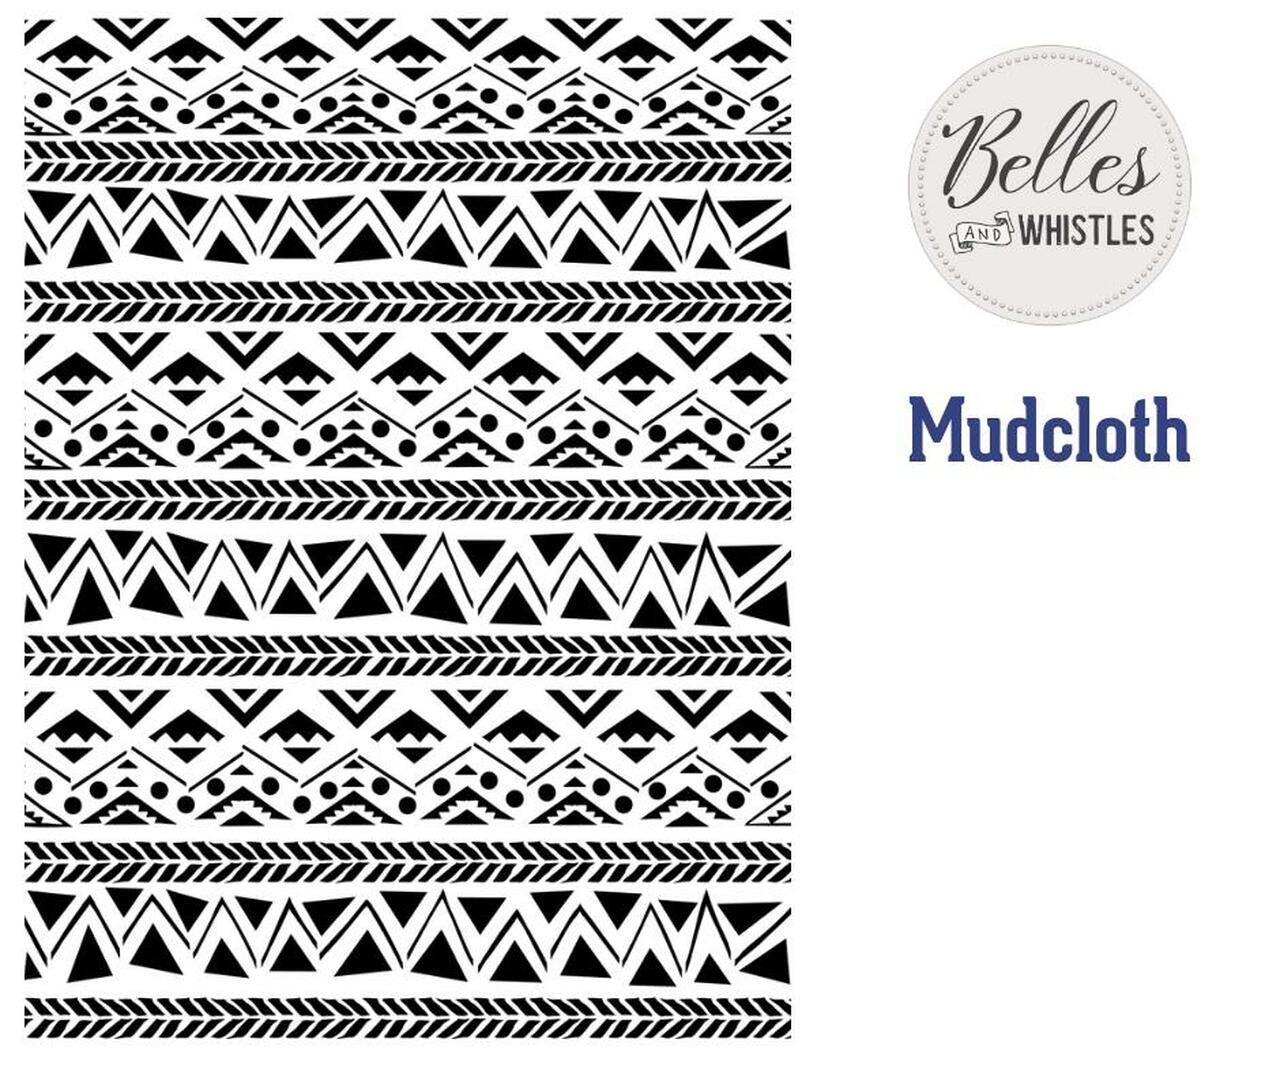 Mudcloth stencil Dixie Belle Belles & Whistles oversized stencil Australian stockist